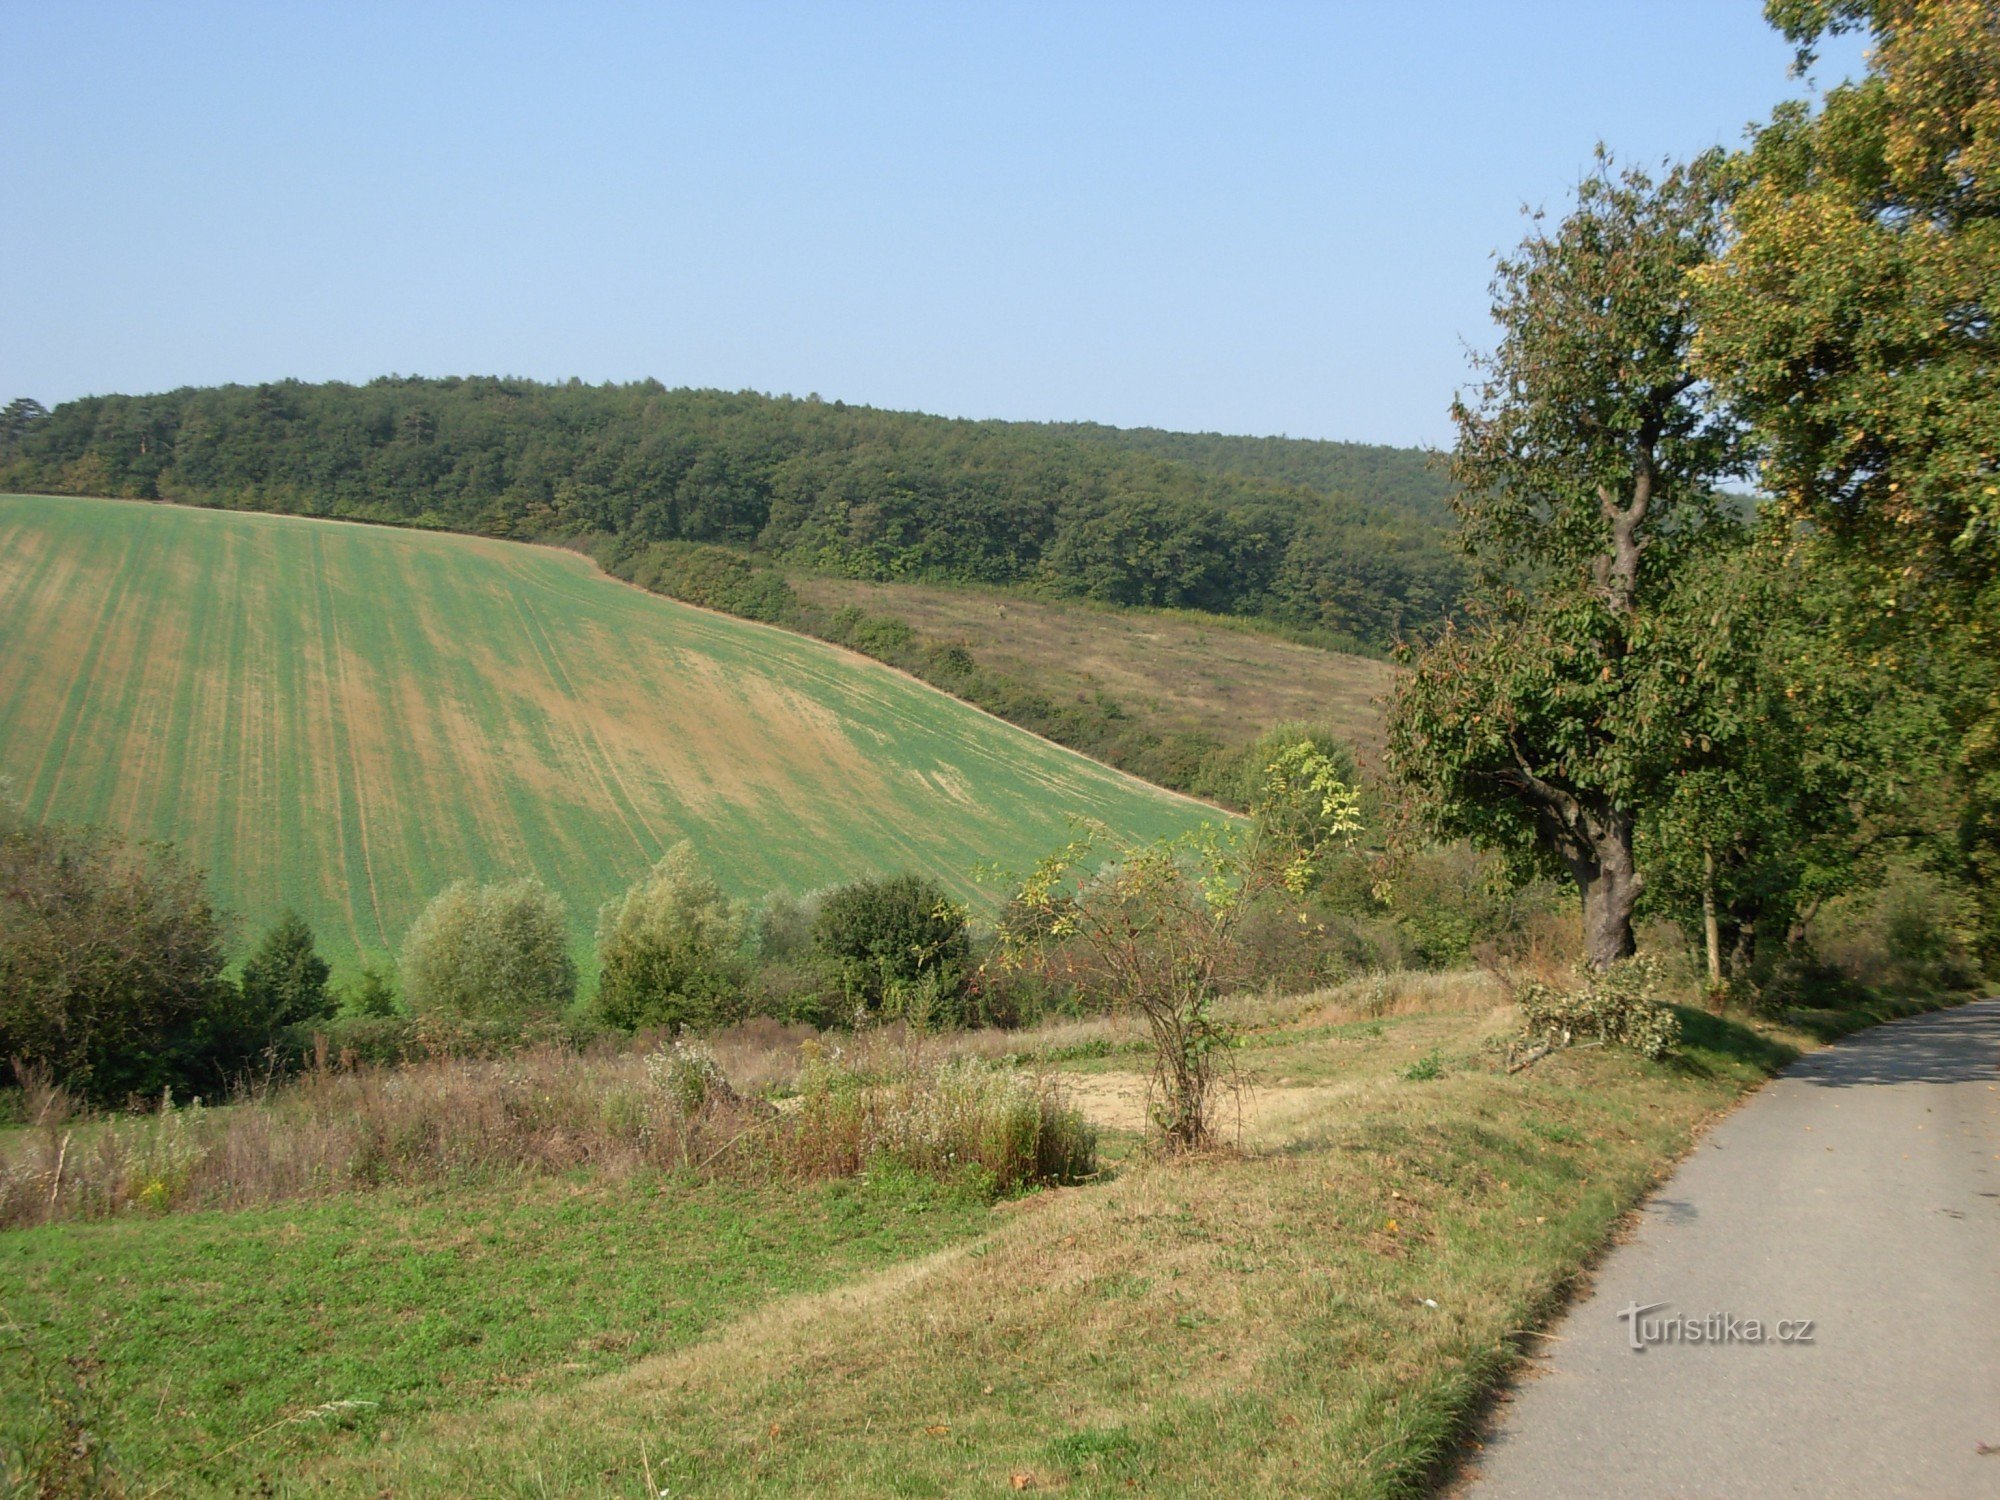 Pofałdowany krajobraz Lasu Ždánického